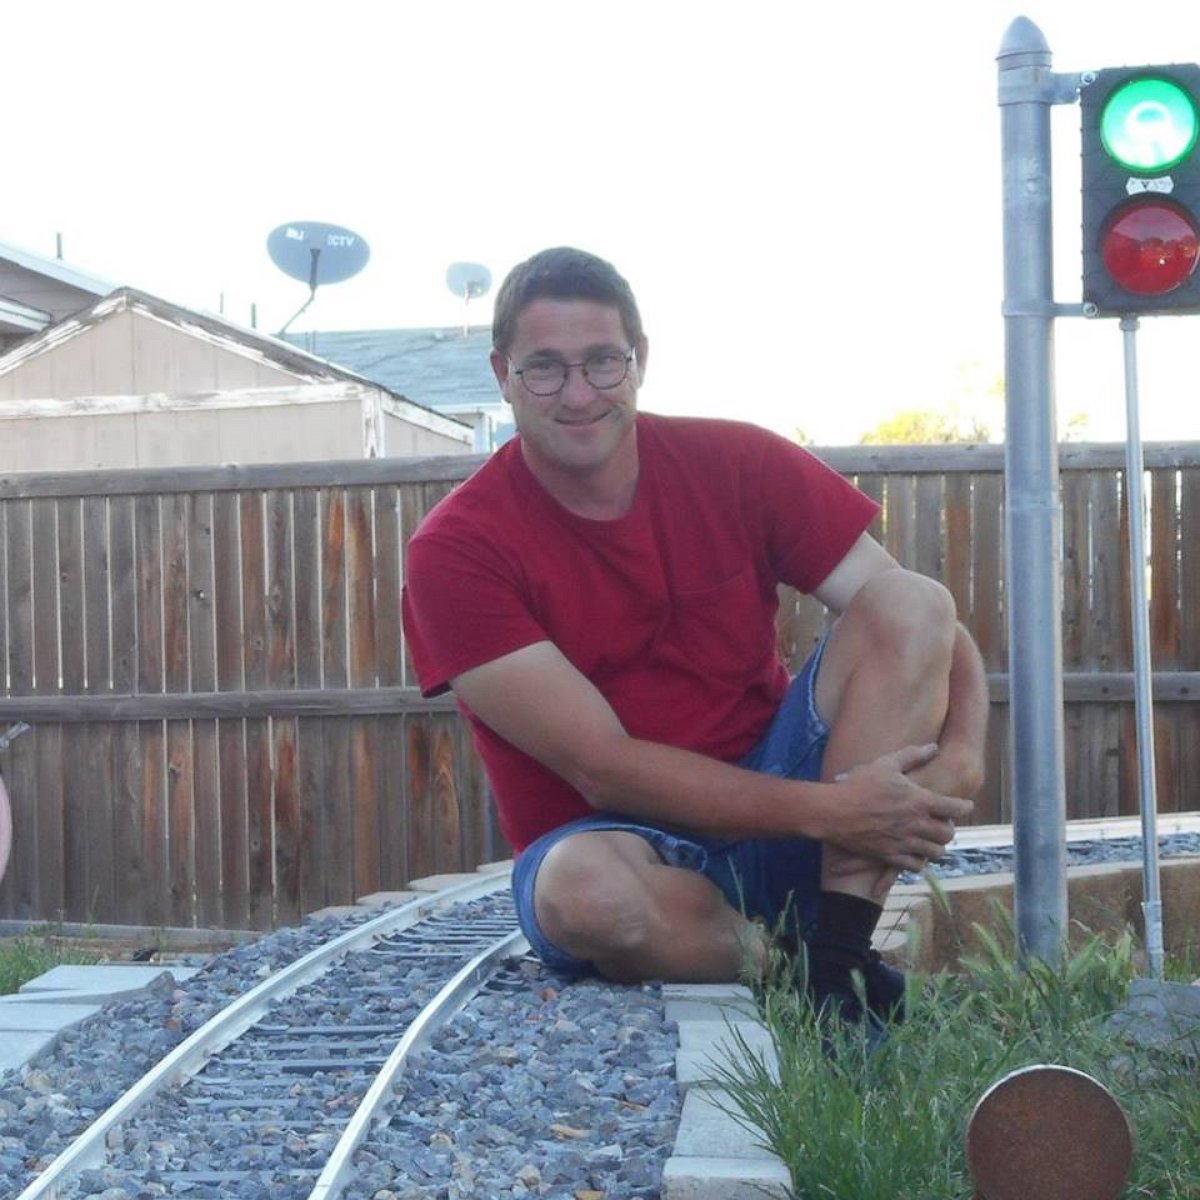 PHOTO: Man Builds 400-Foot Backyard Railroad Because He ‘Got a Wild Bug’